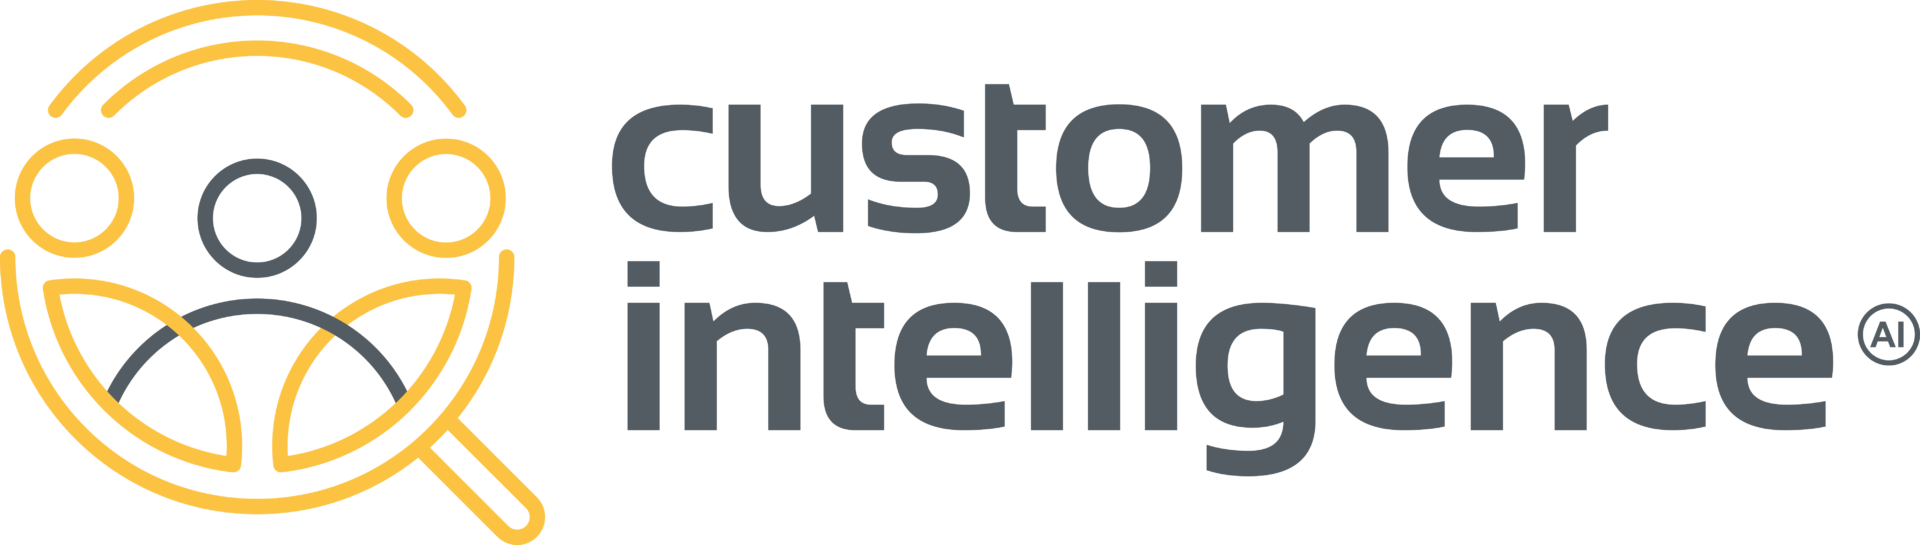 Data Courage - Customer Intelligence